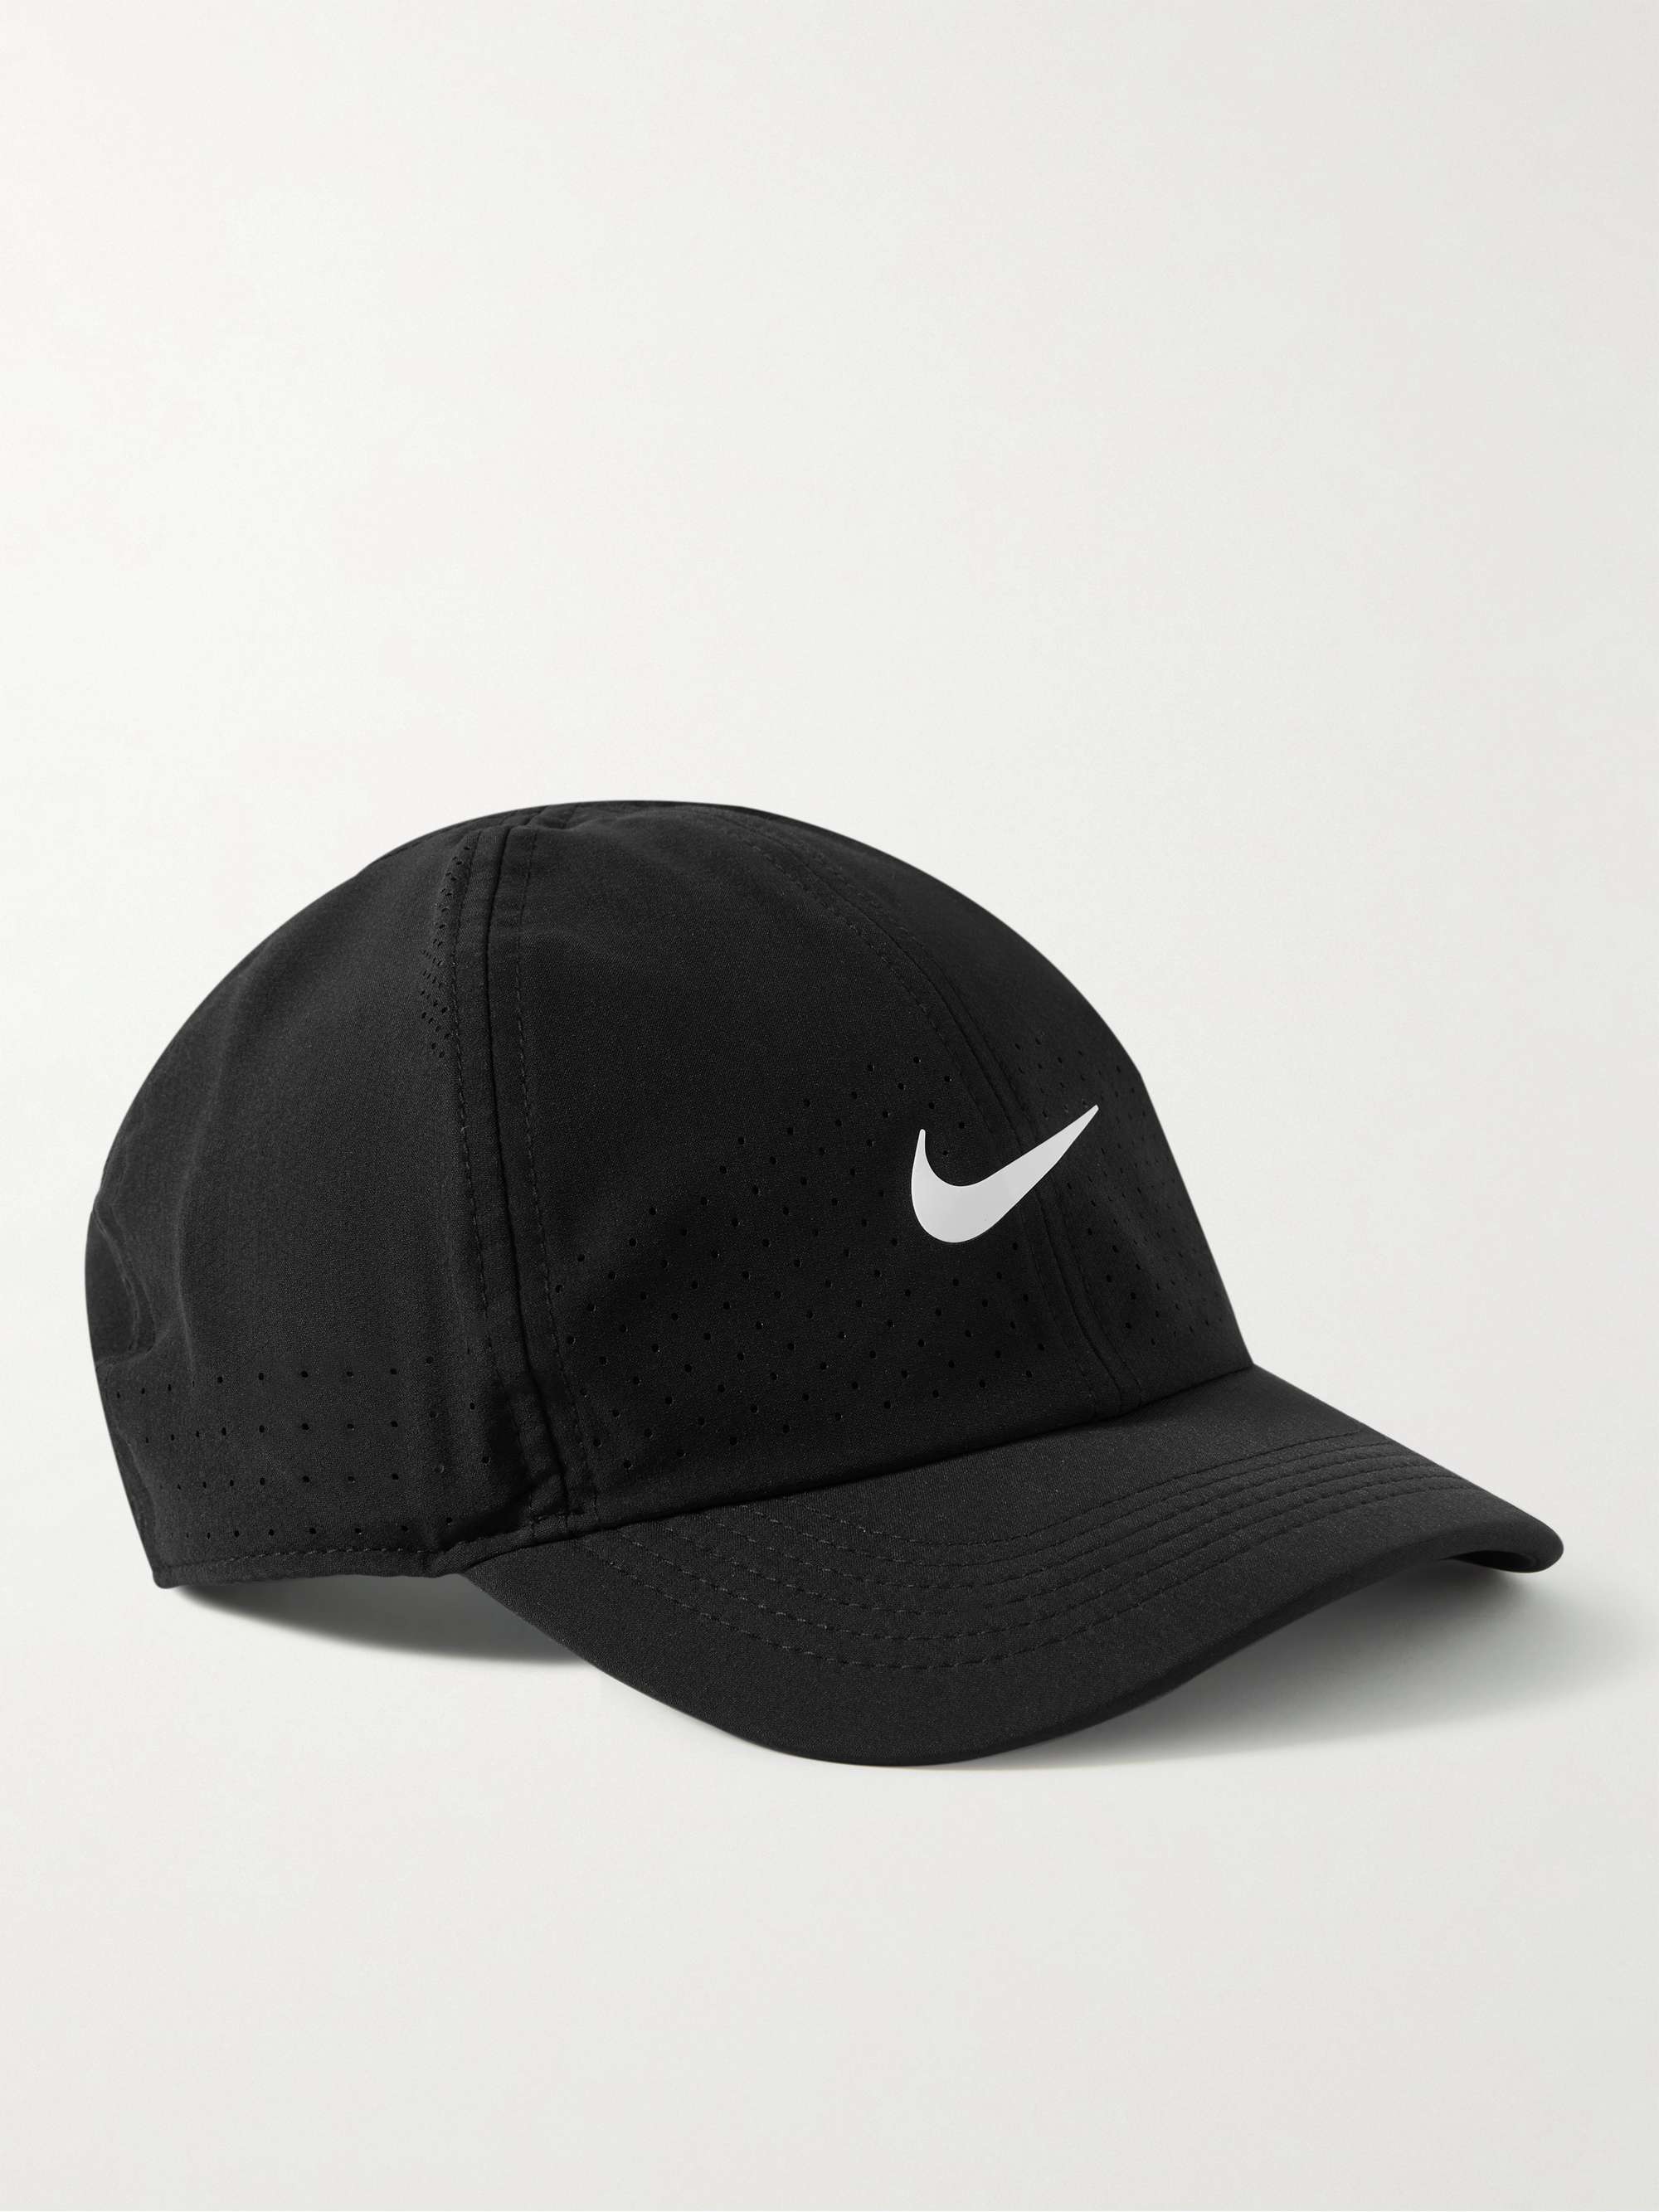 NIKE TENNIS NikeCourt AeroBill Advantage Perforated Dri-FIT Baseball Cap